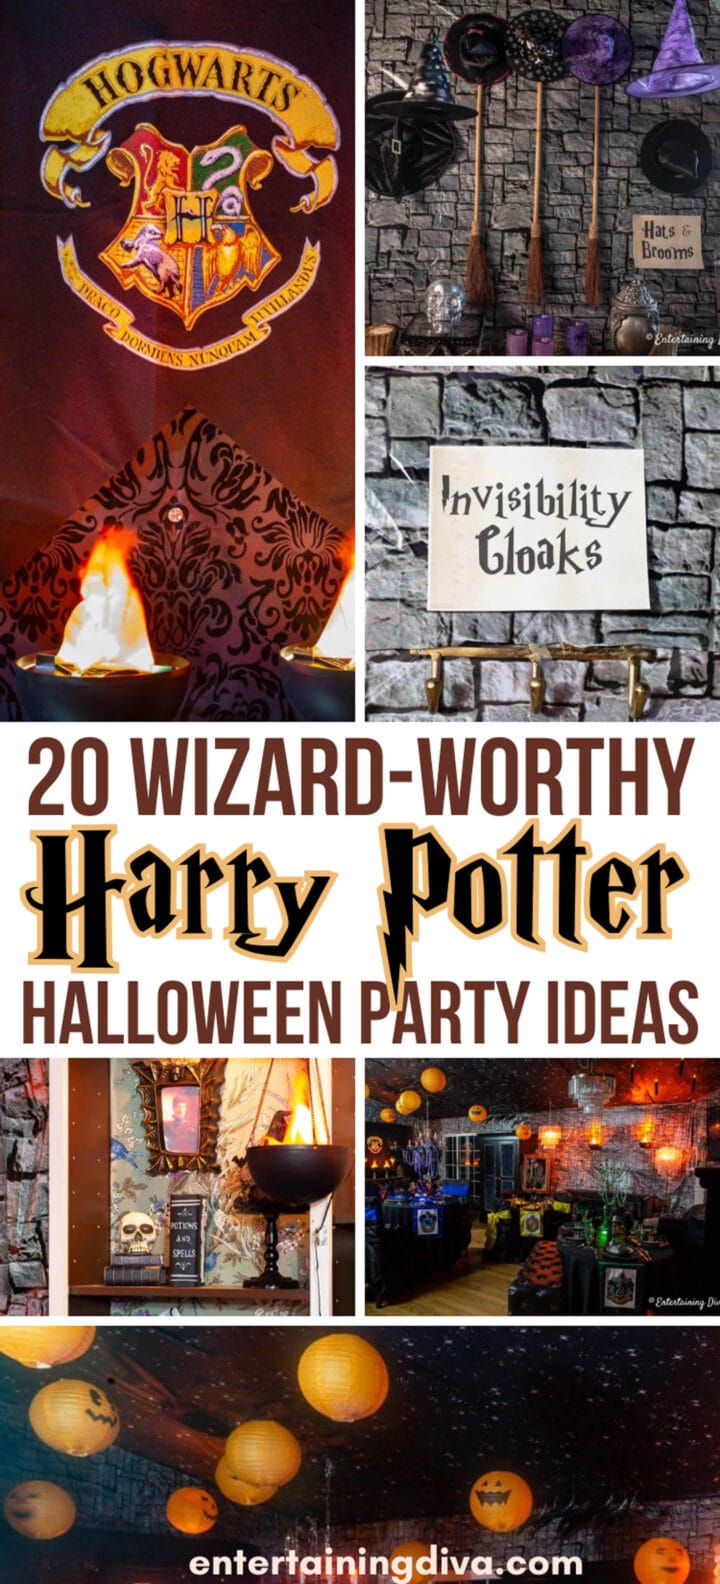 20 wizard worthy Harry Potter Halloween party ideas.